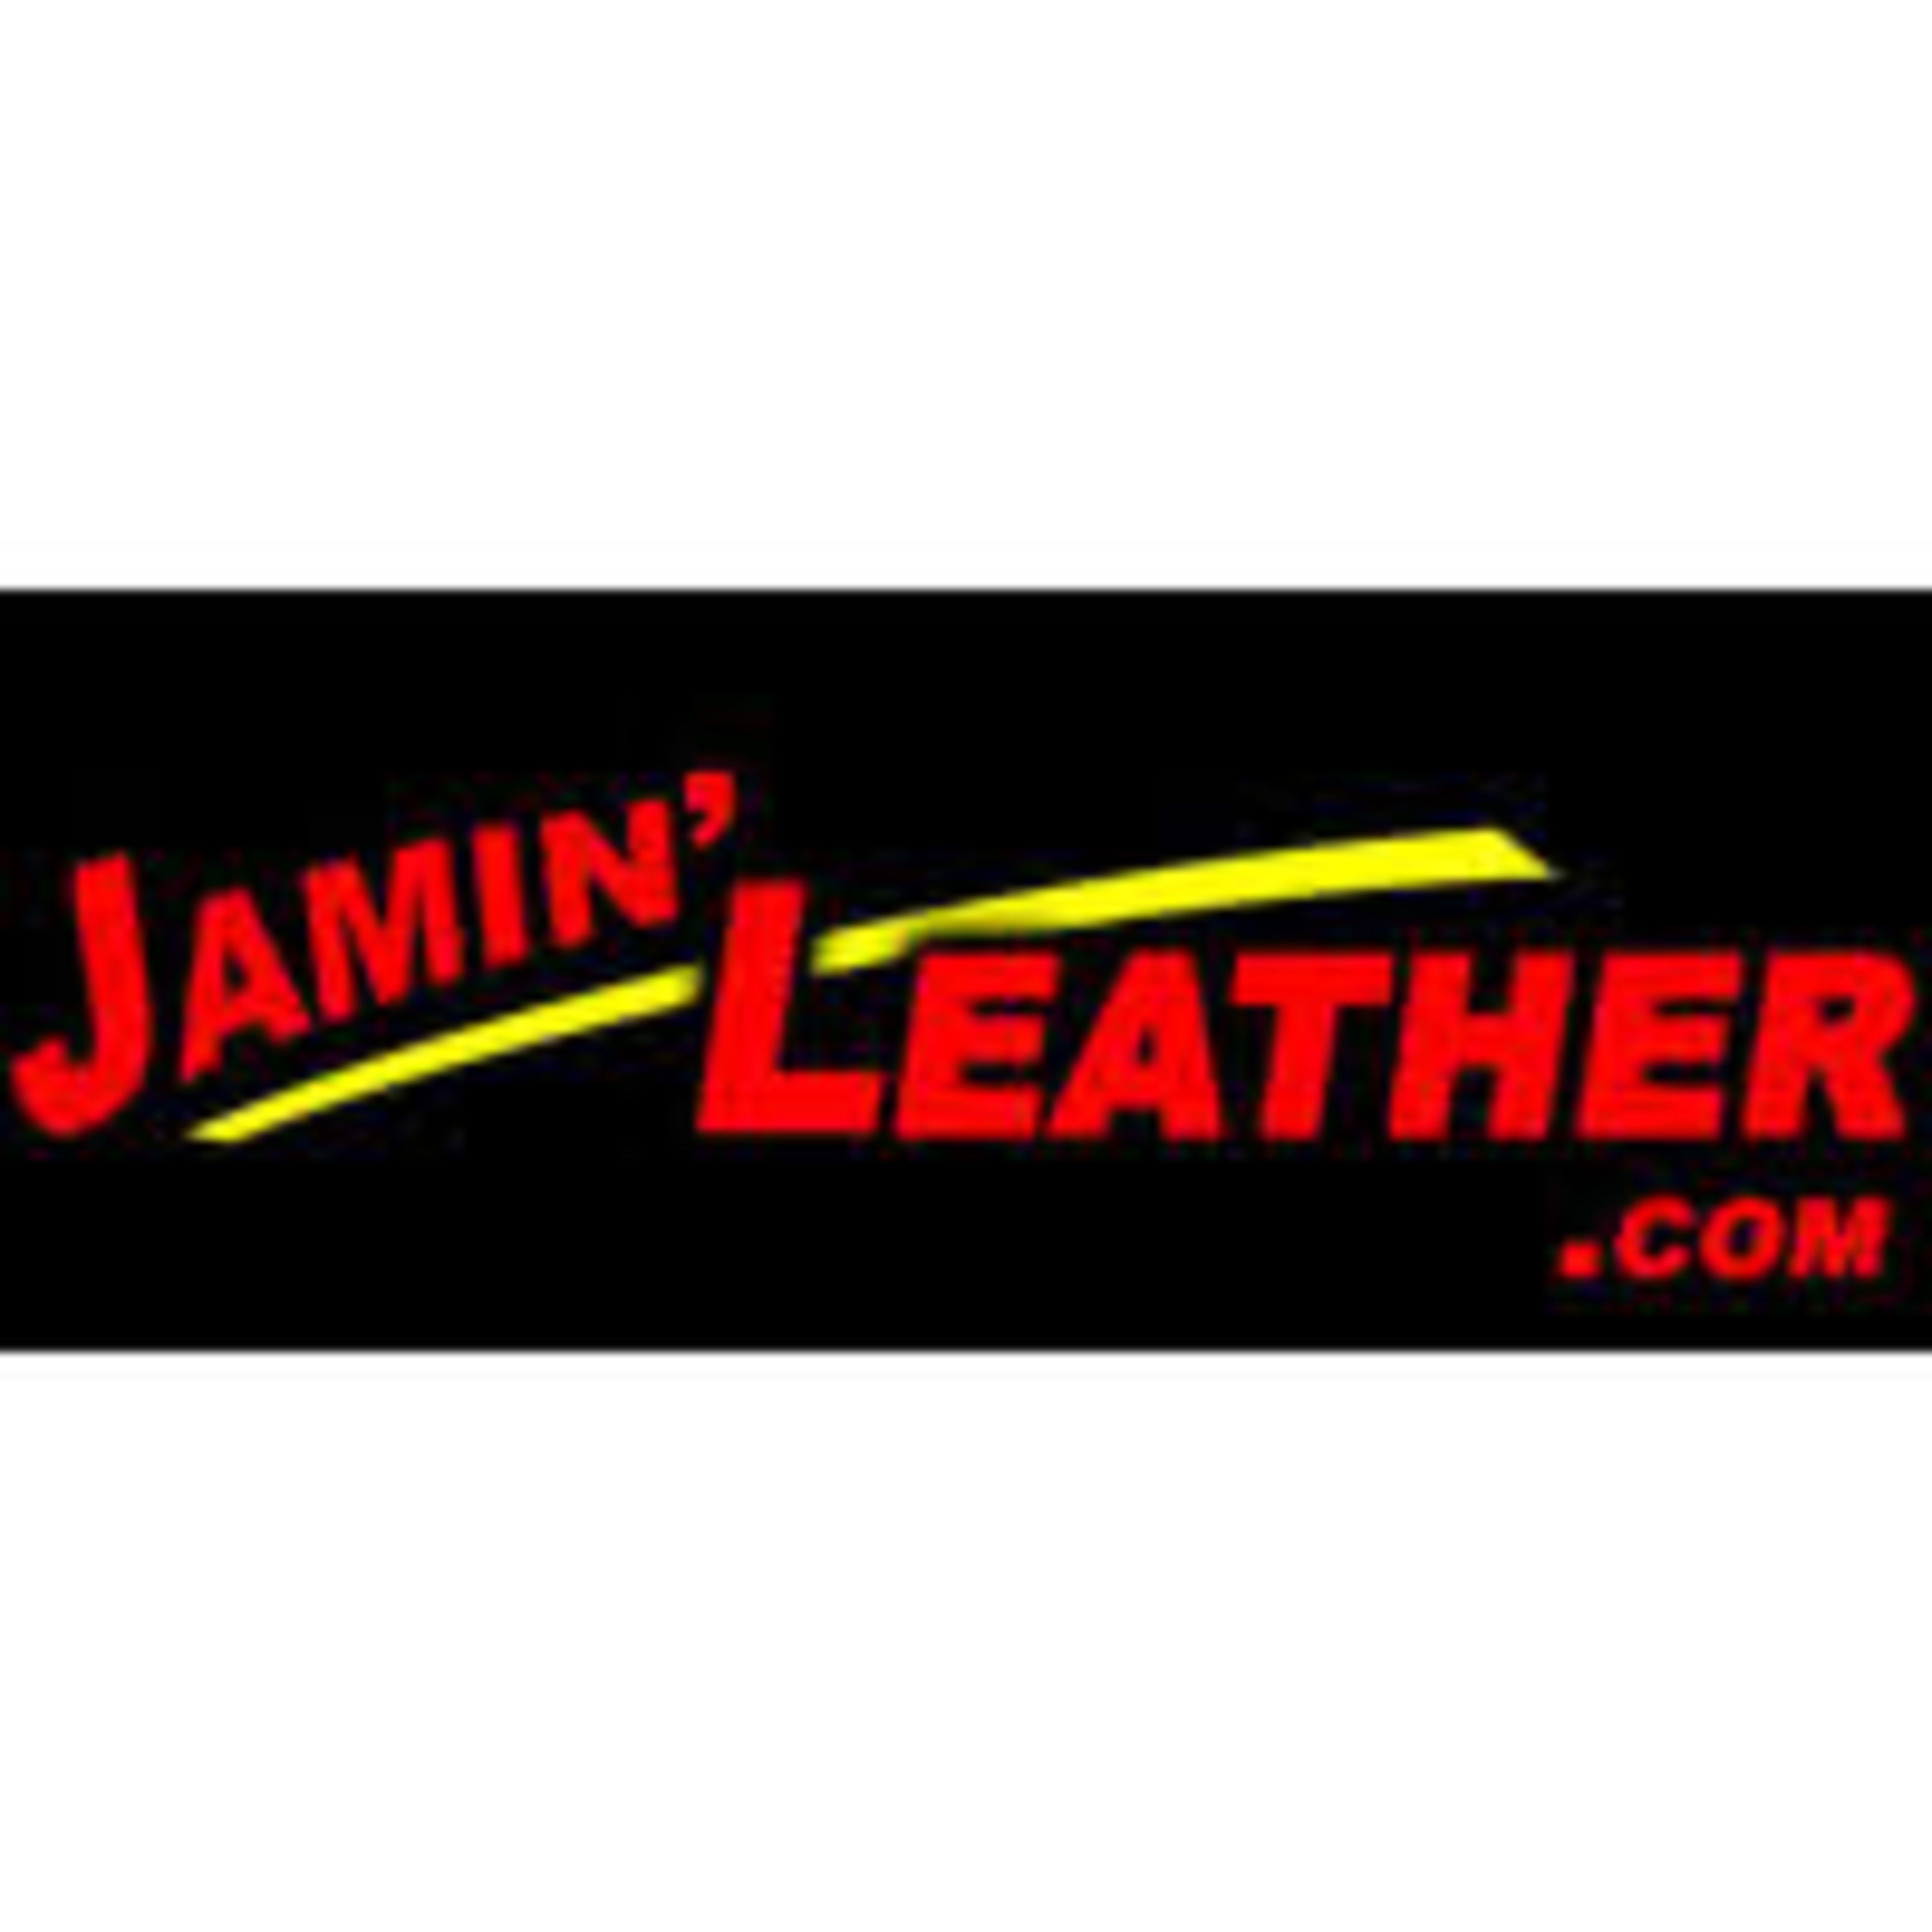 Jamin' Leather Code